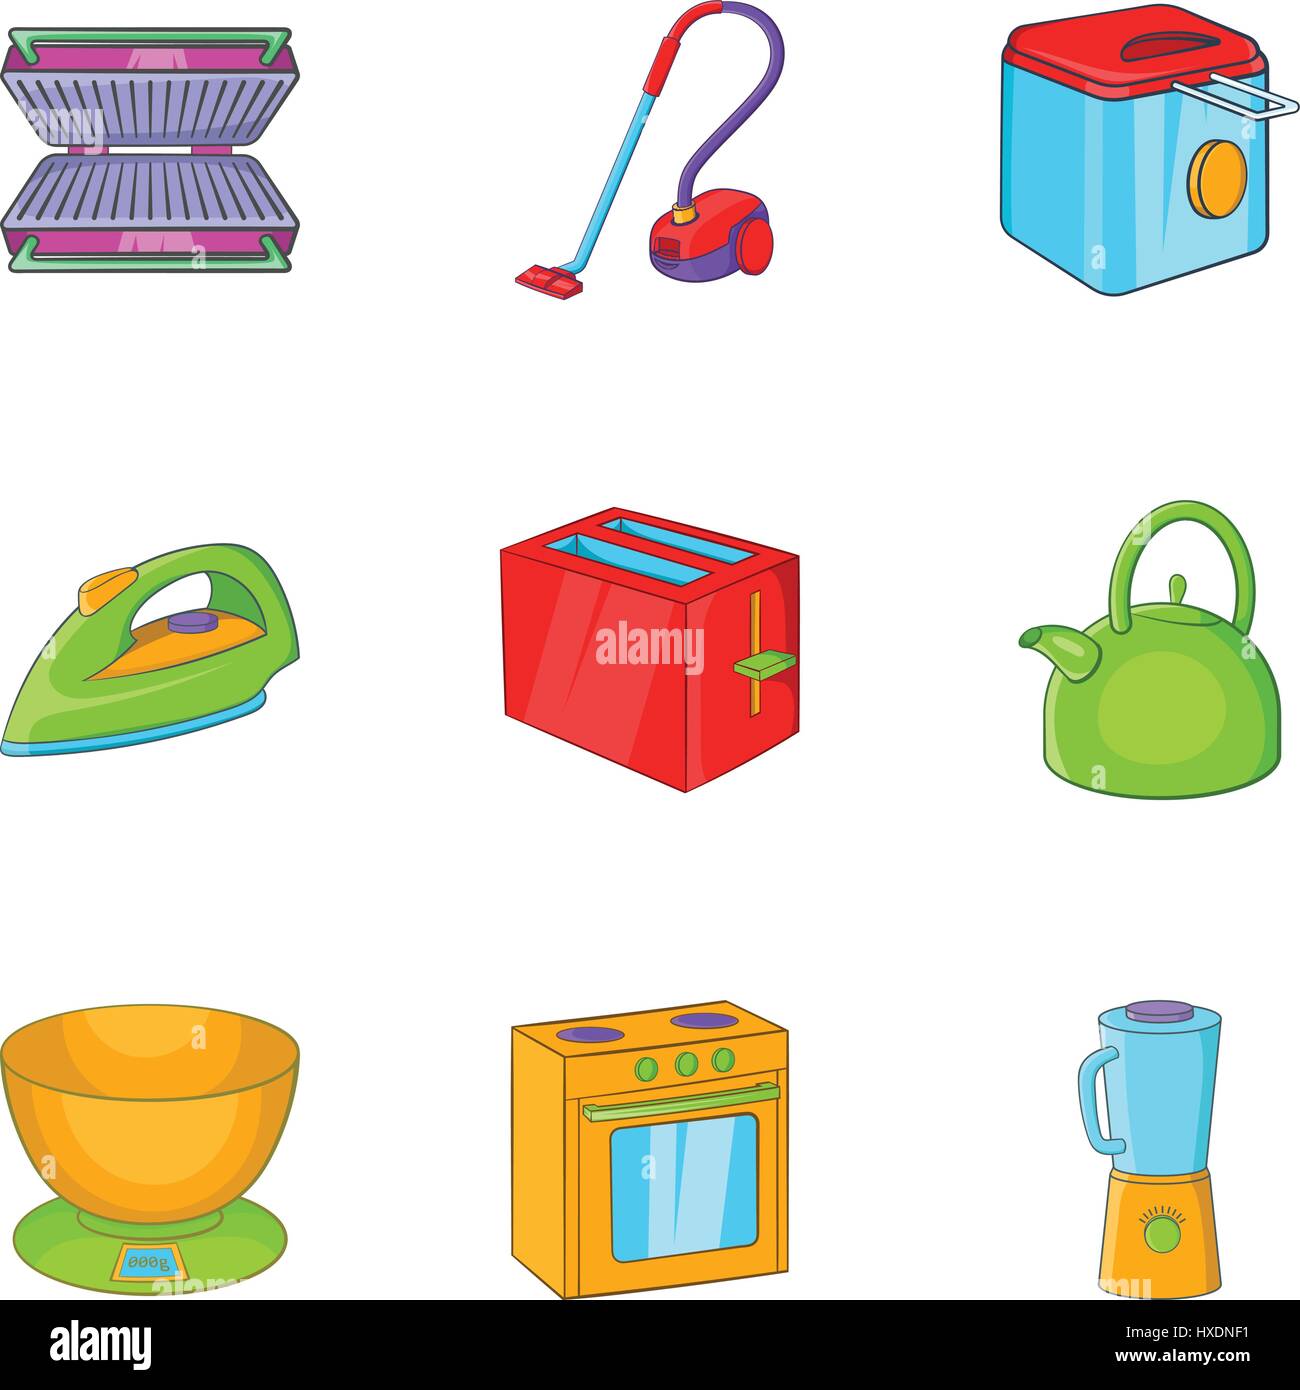 Home appliances icons set, cartoon style Stock Vector